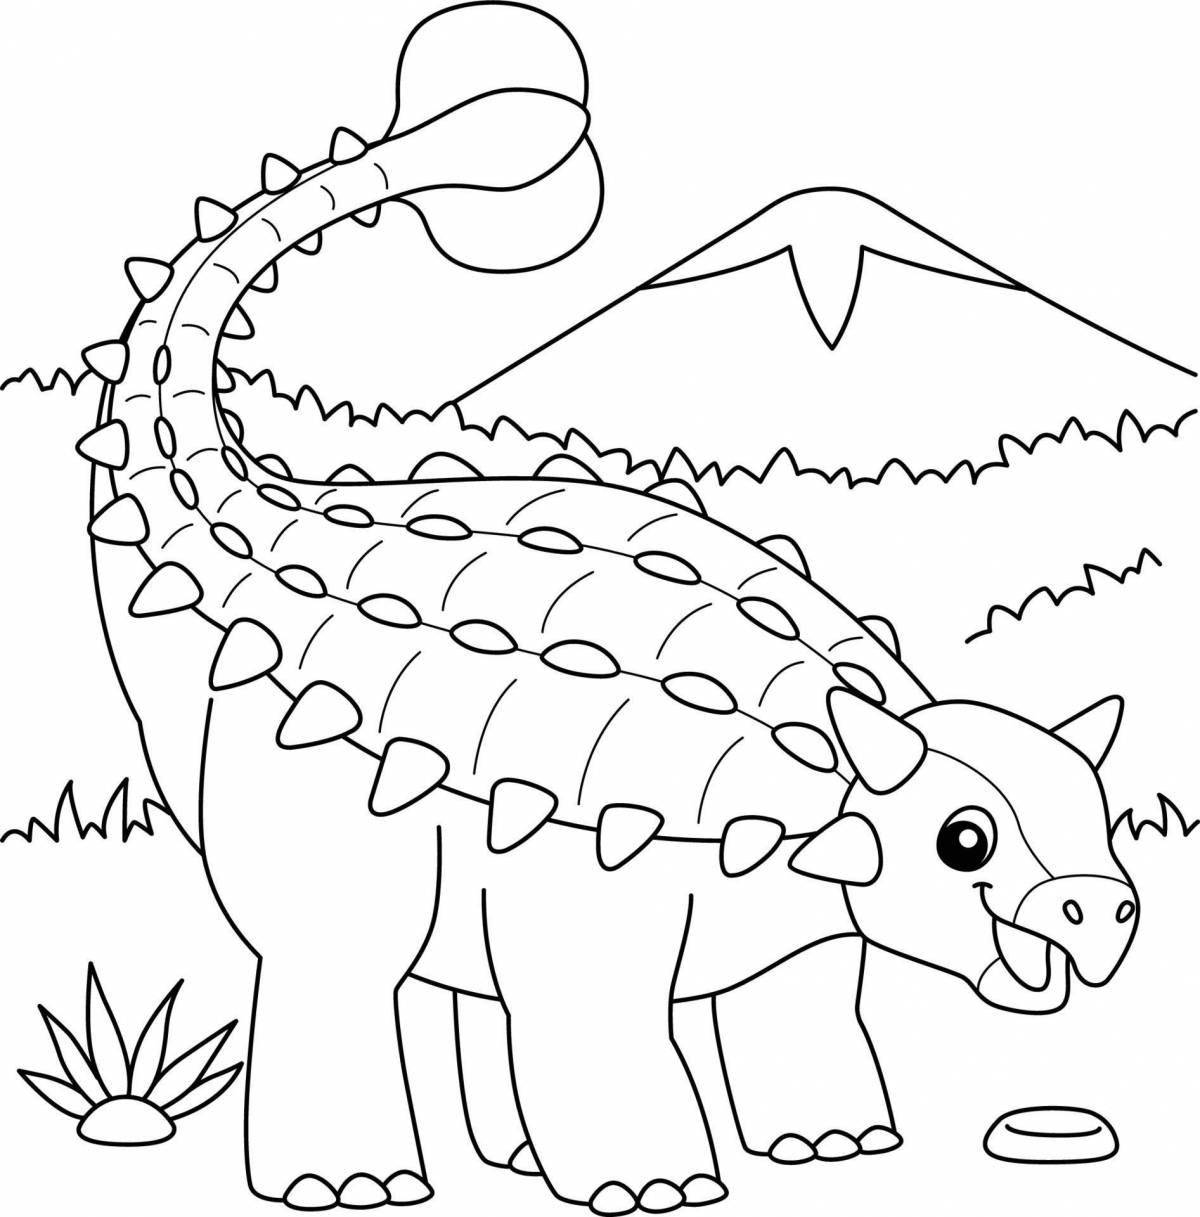 Ankylosaurus coloring book for kids